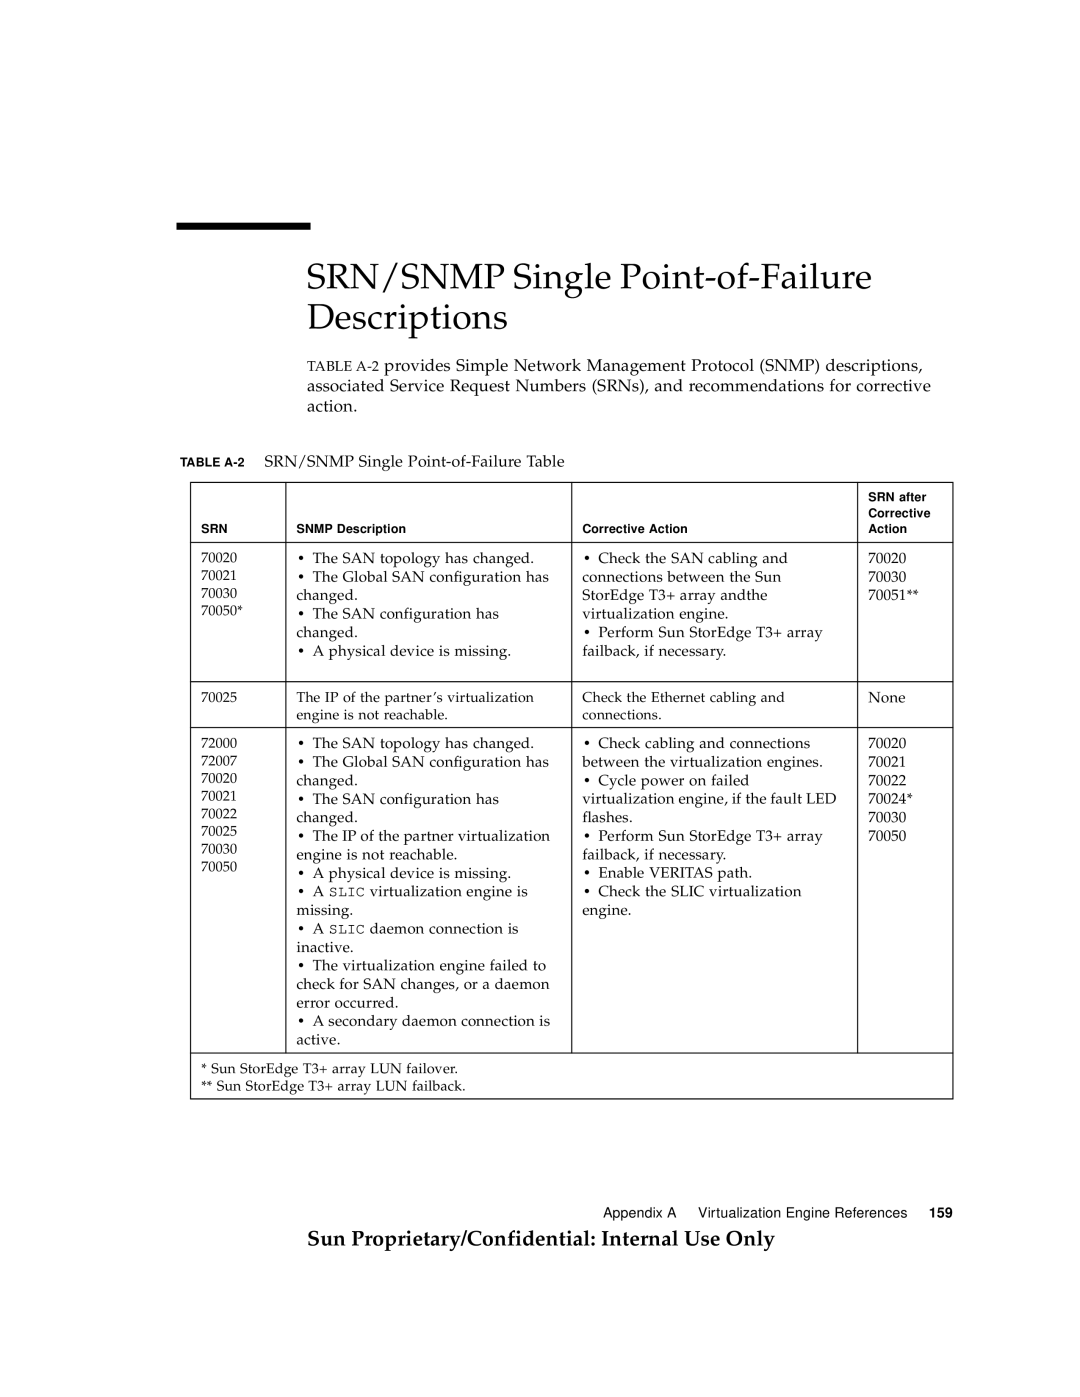 Sun Microsystems 6900, 3900 SRN/SNMP Single Point-of-Failure Descriptions, Sun Proprietary/Confidential Internal Use Only 